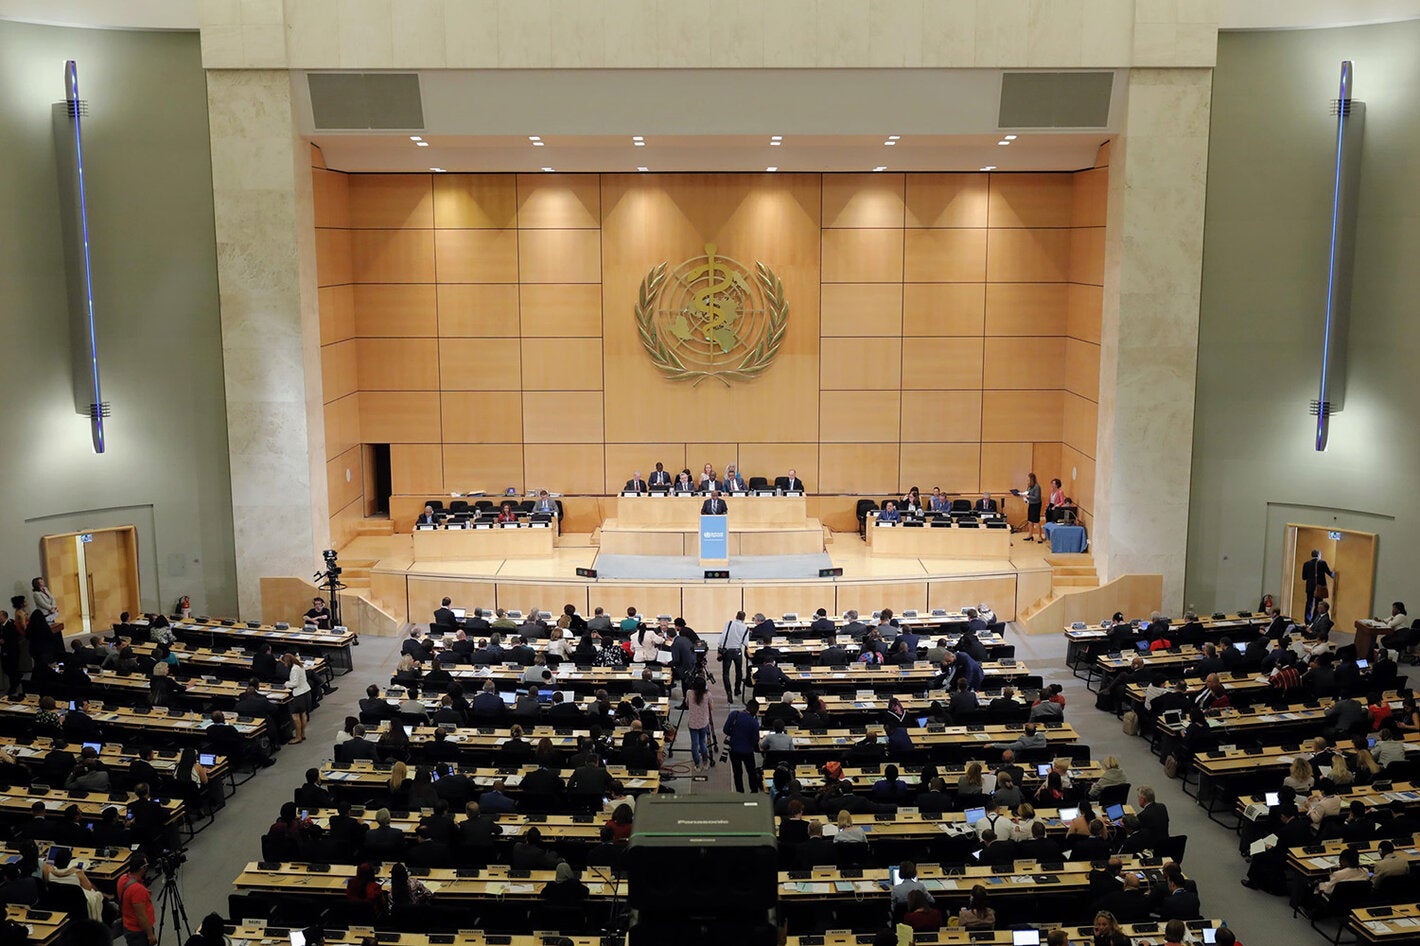 La 75.ª Asamblea Mundial de la Salud se centrará en "salud para la paz, paz para la salud" - OPS/OMS | Organización Panamericana de la Salud